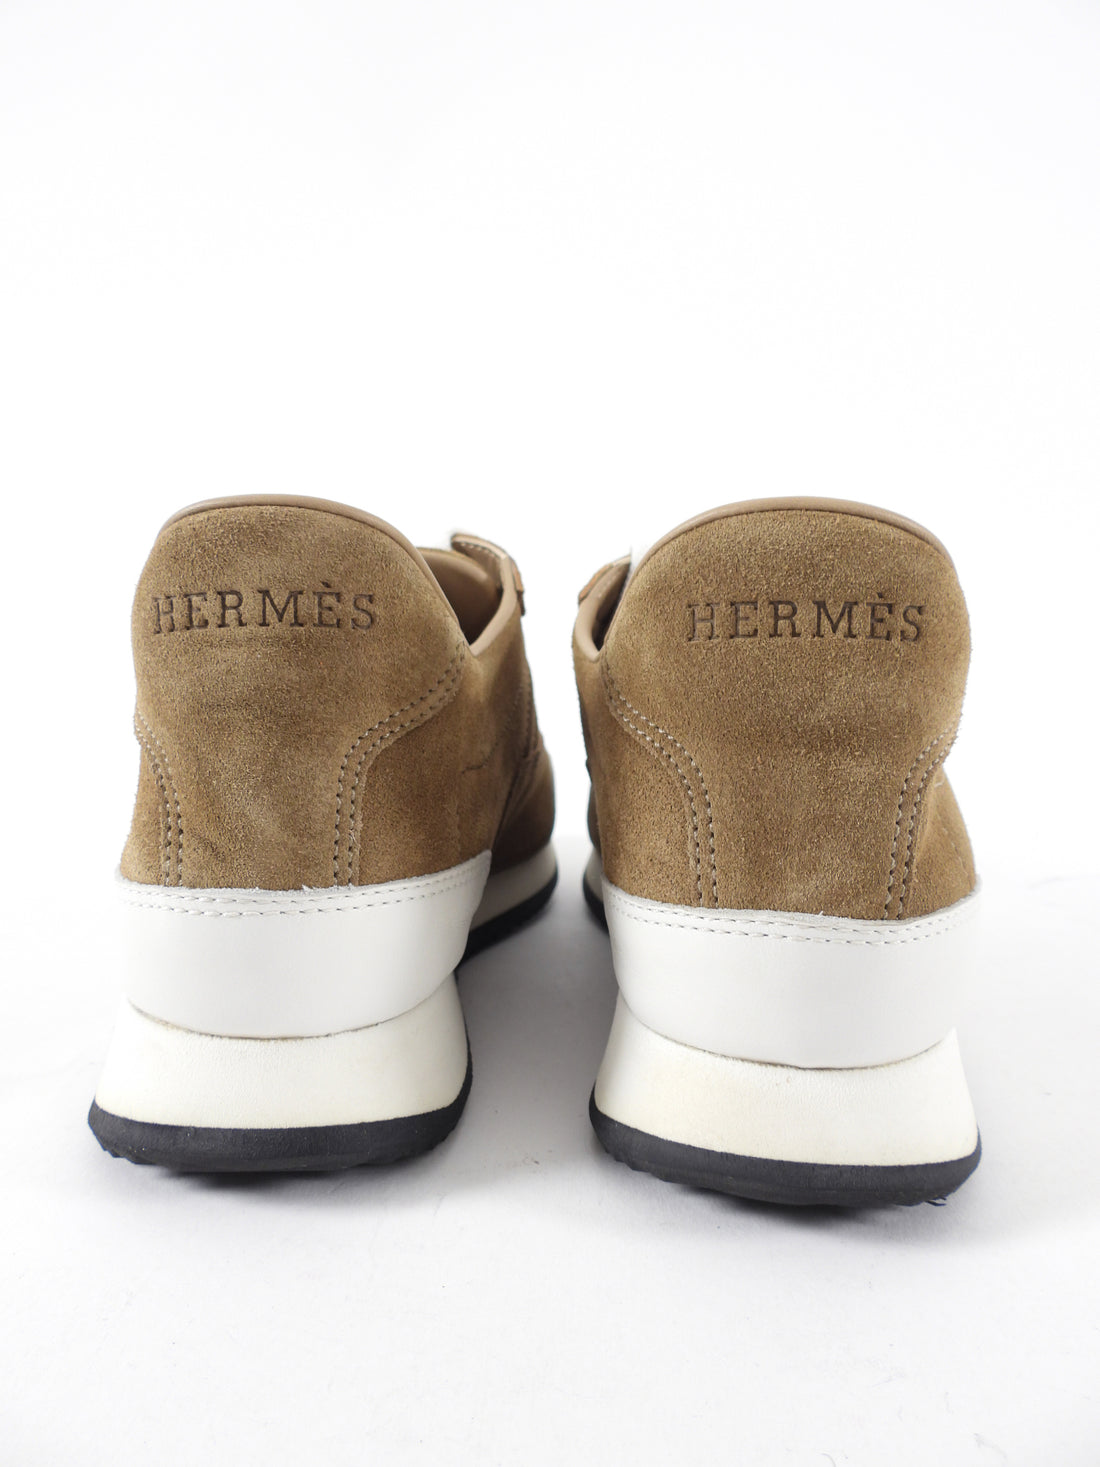 Hermes Goal Suede Light Brown Sneakers - 37 / USA 6.5